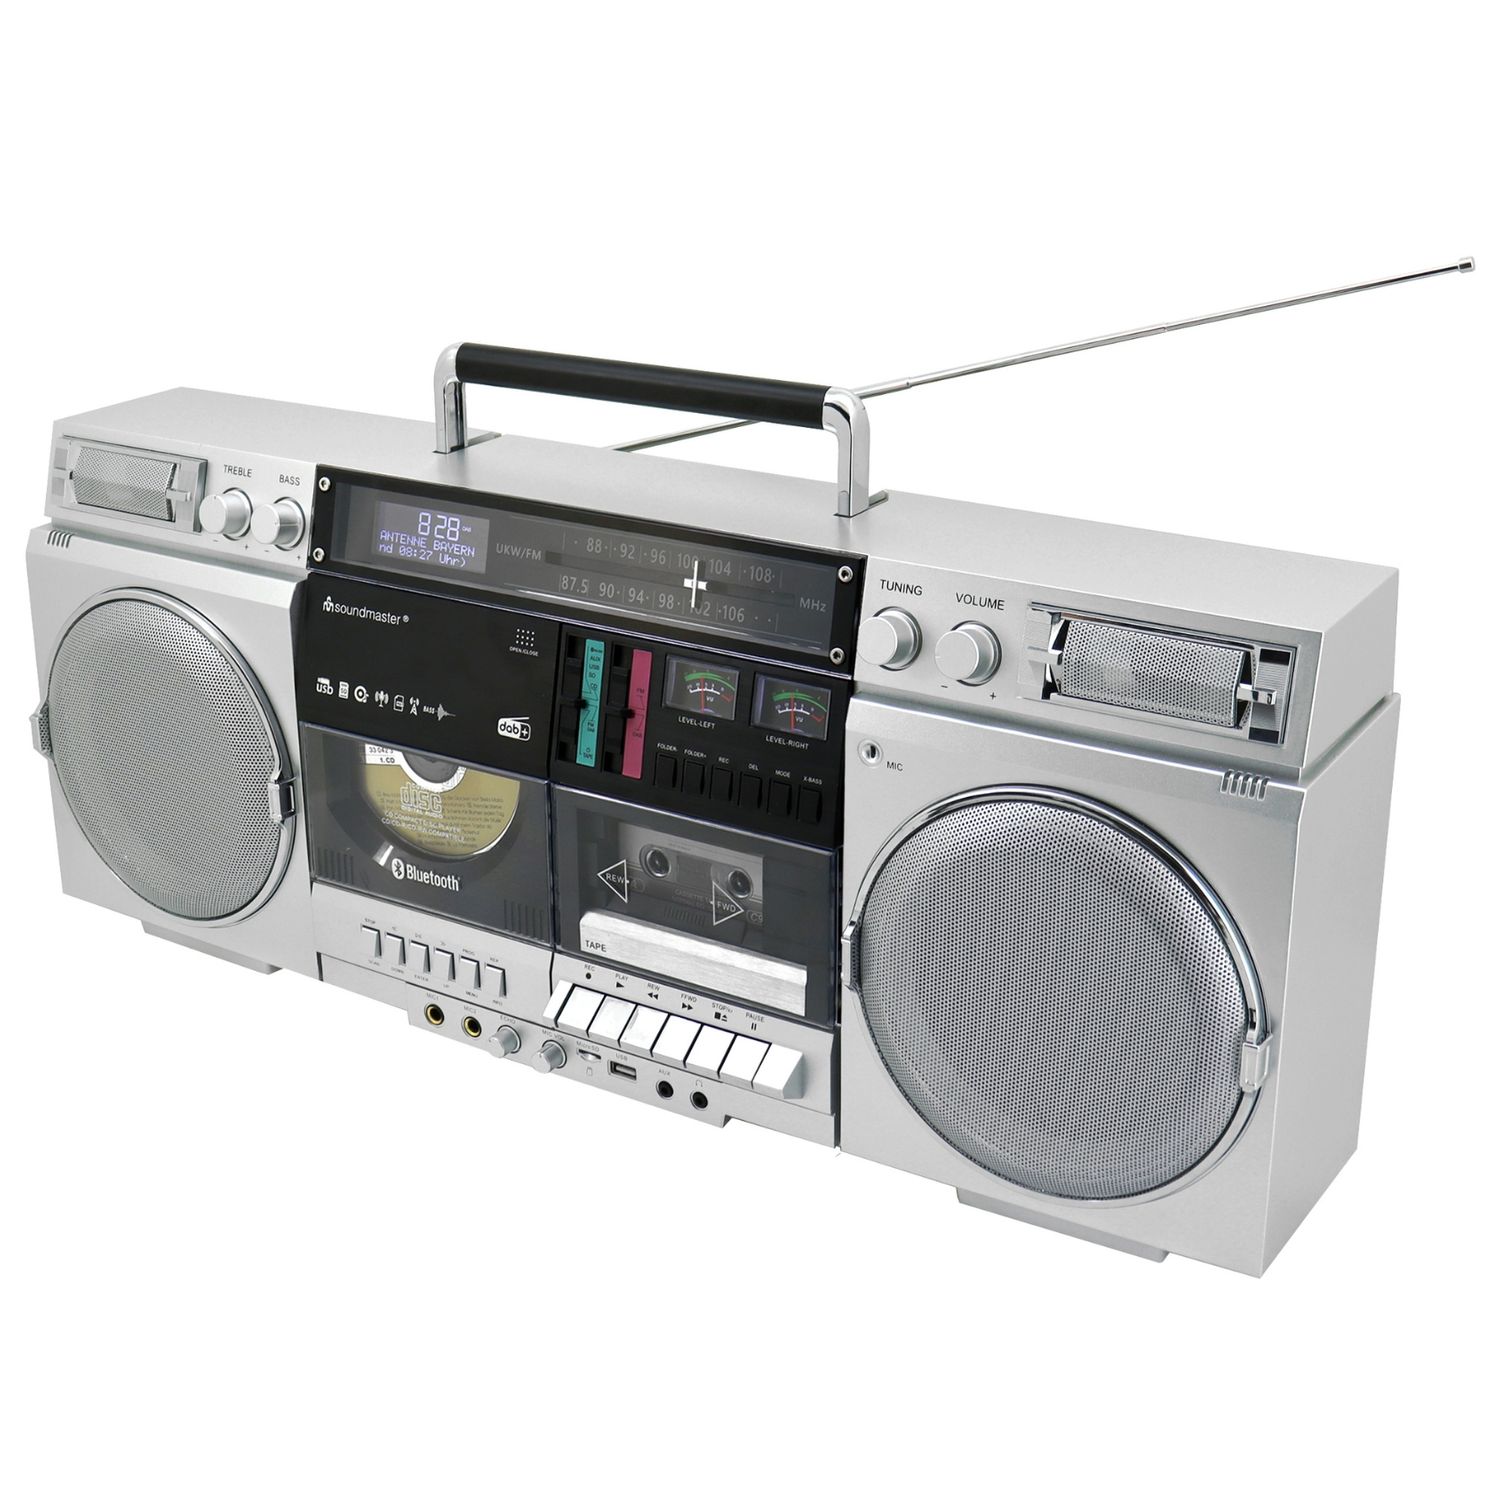 Soundmaster SCD1980SI Ghettoblaster Boombox DAB+ CD MP3 portable cassette recorder USB encoding bass-reflex microphone connection karaoke